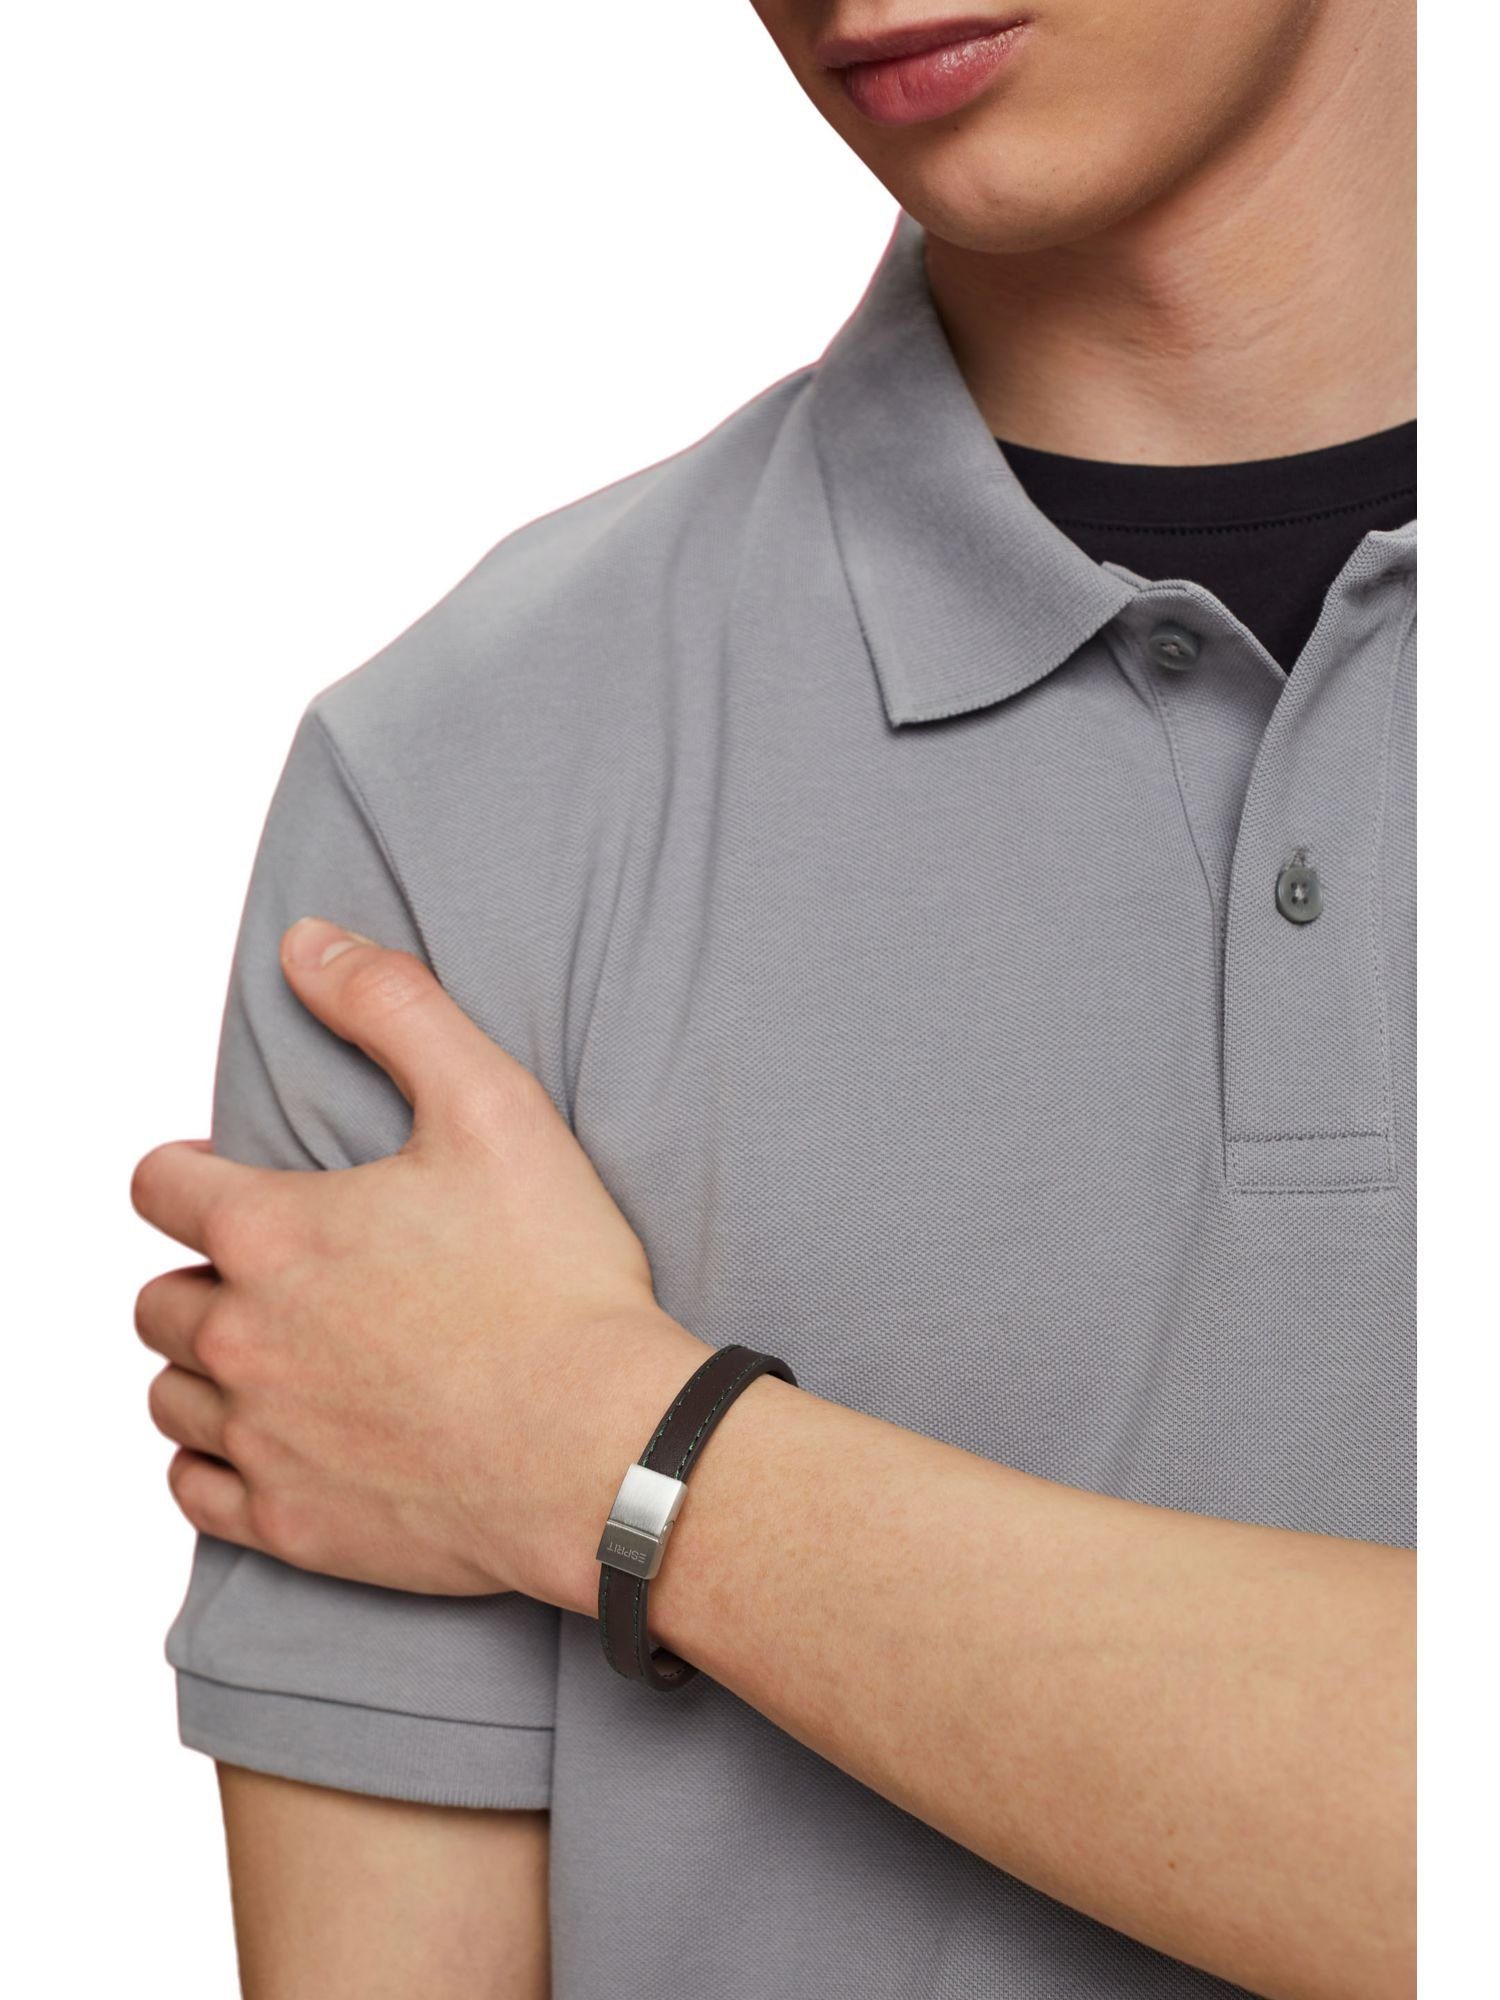 mit Armband Esprit Lederoptik Magnetverschluss in Armband braun